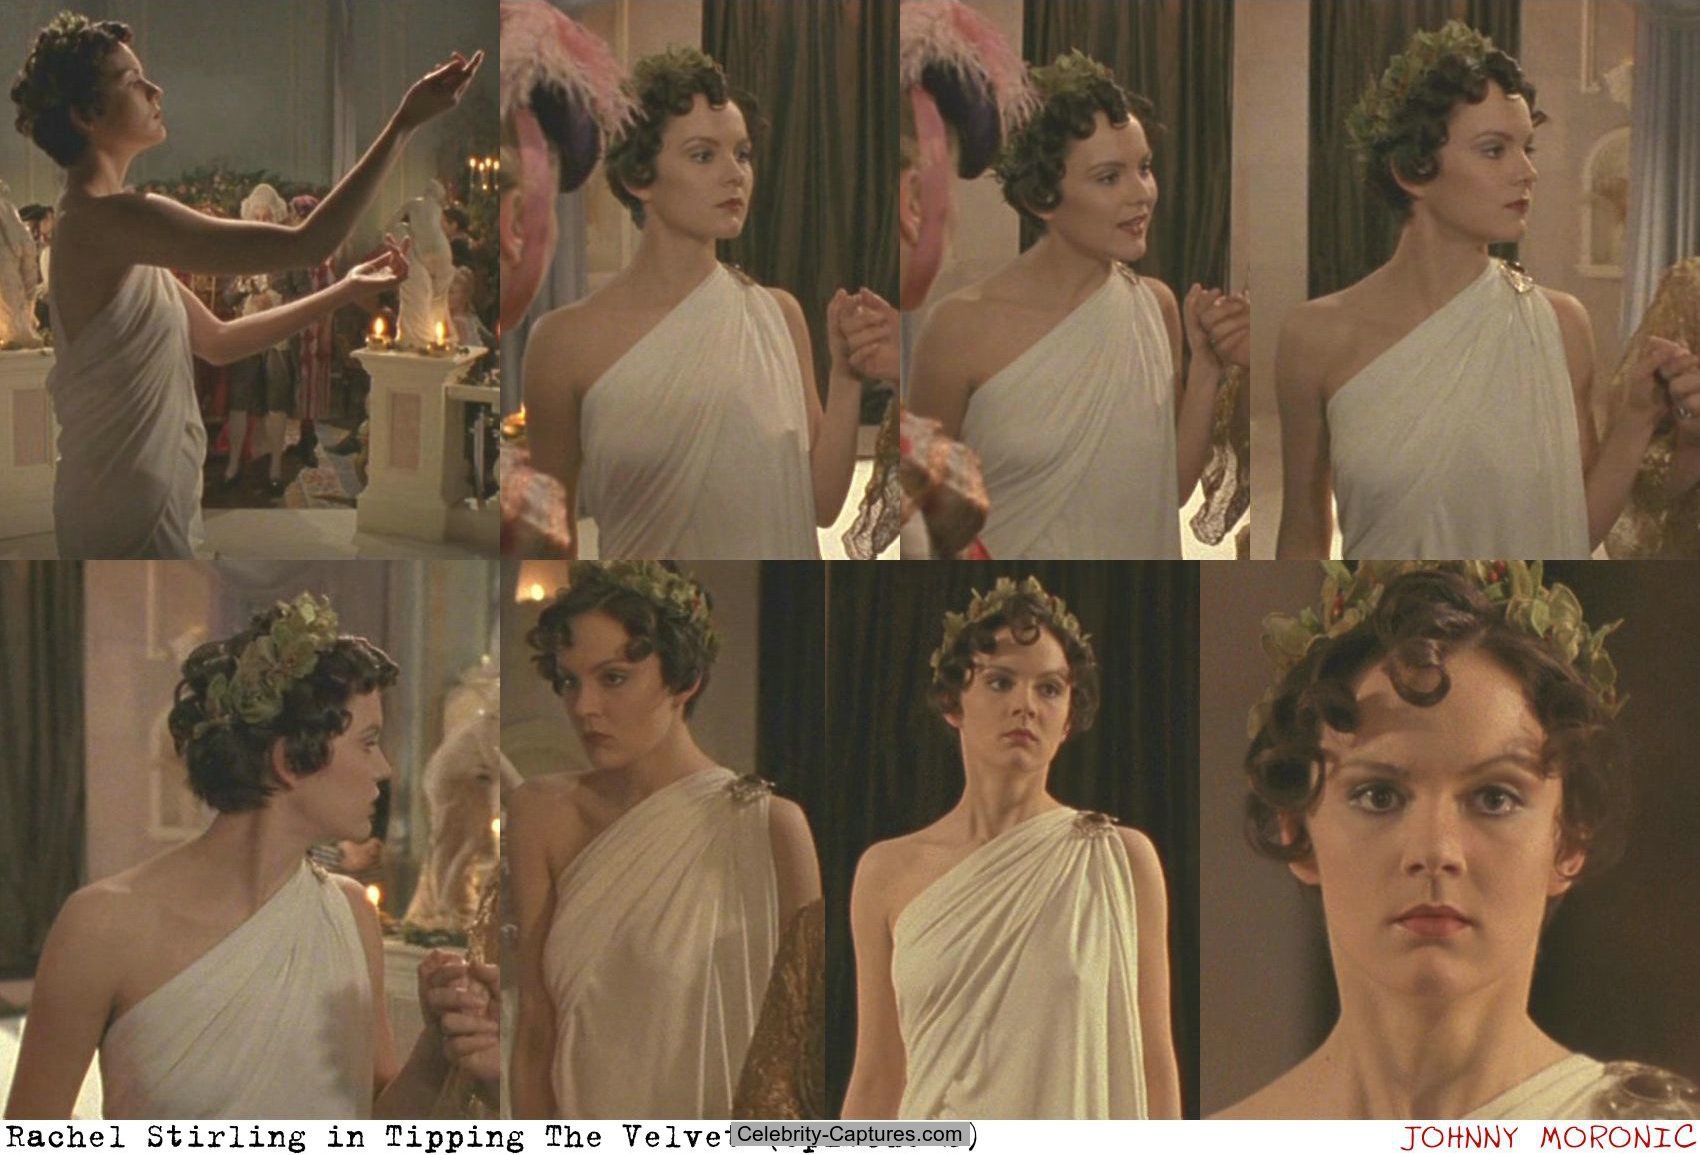 Rachel Stirling naked scenes from Tipping the Velvet (Total images - 11). 